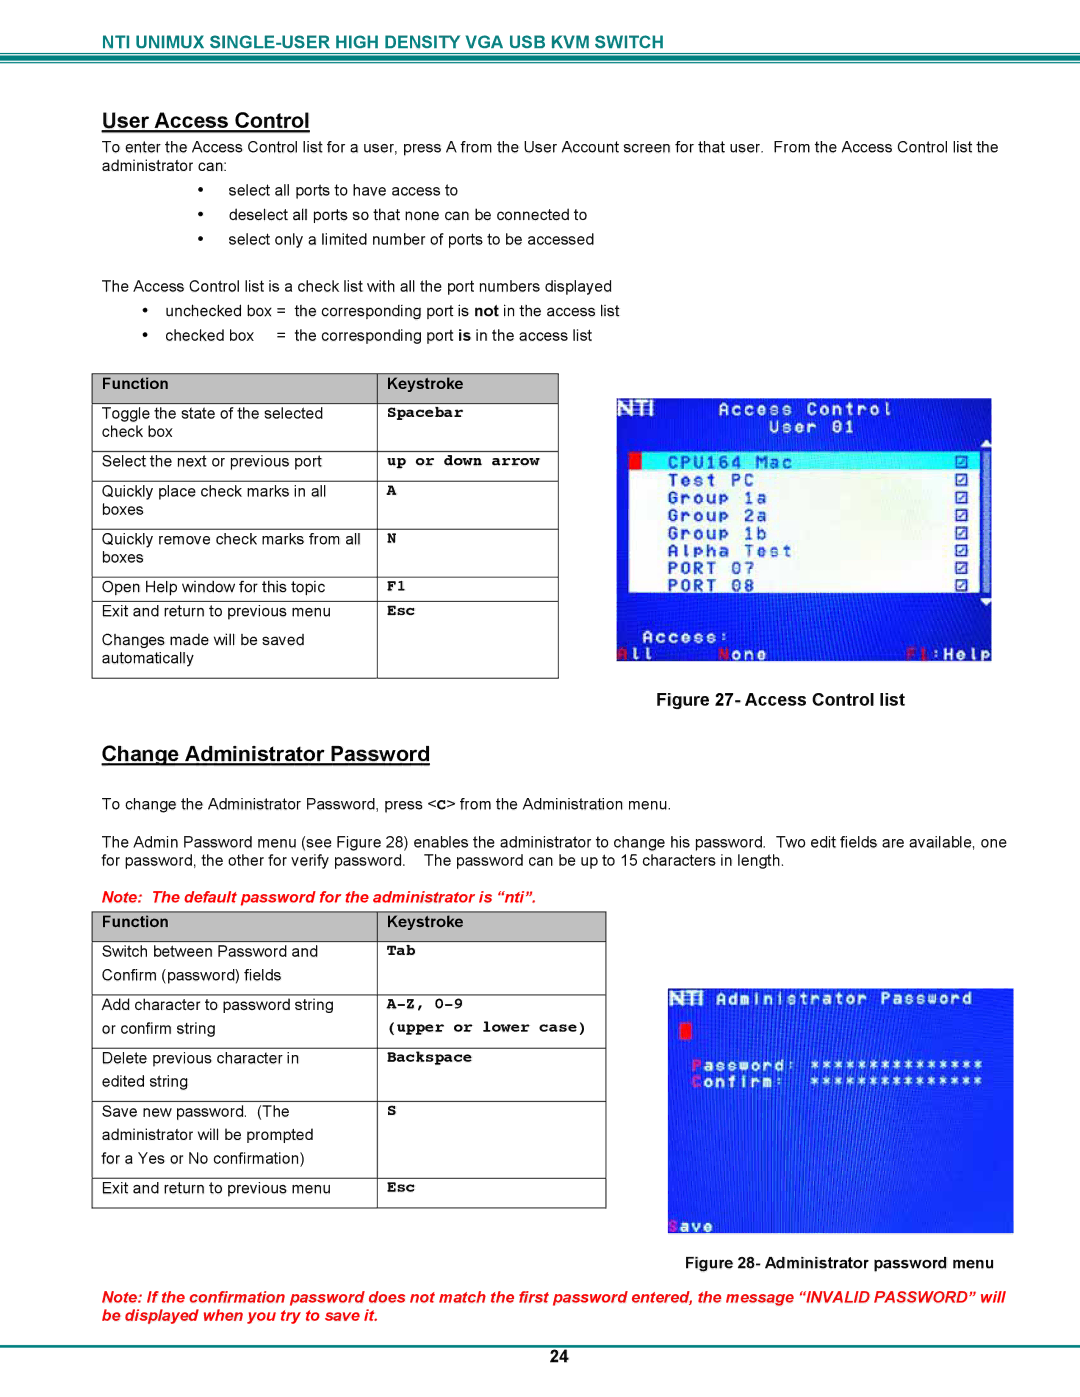 Network Technologies UNIMUXUSBVXHD operation manual User Access Control, Change Administrator Password 